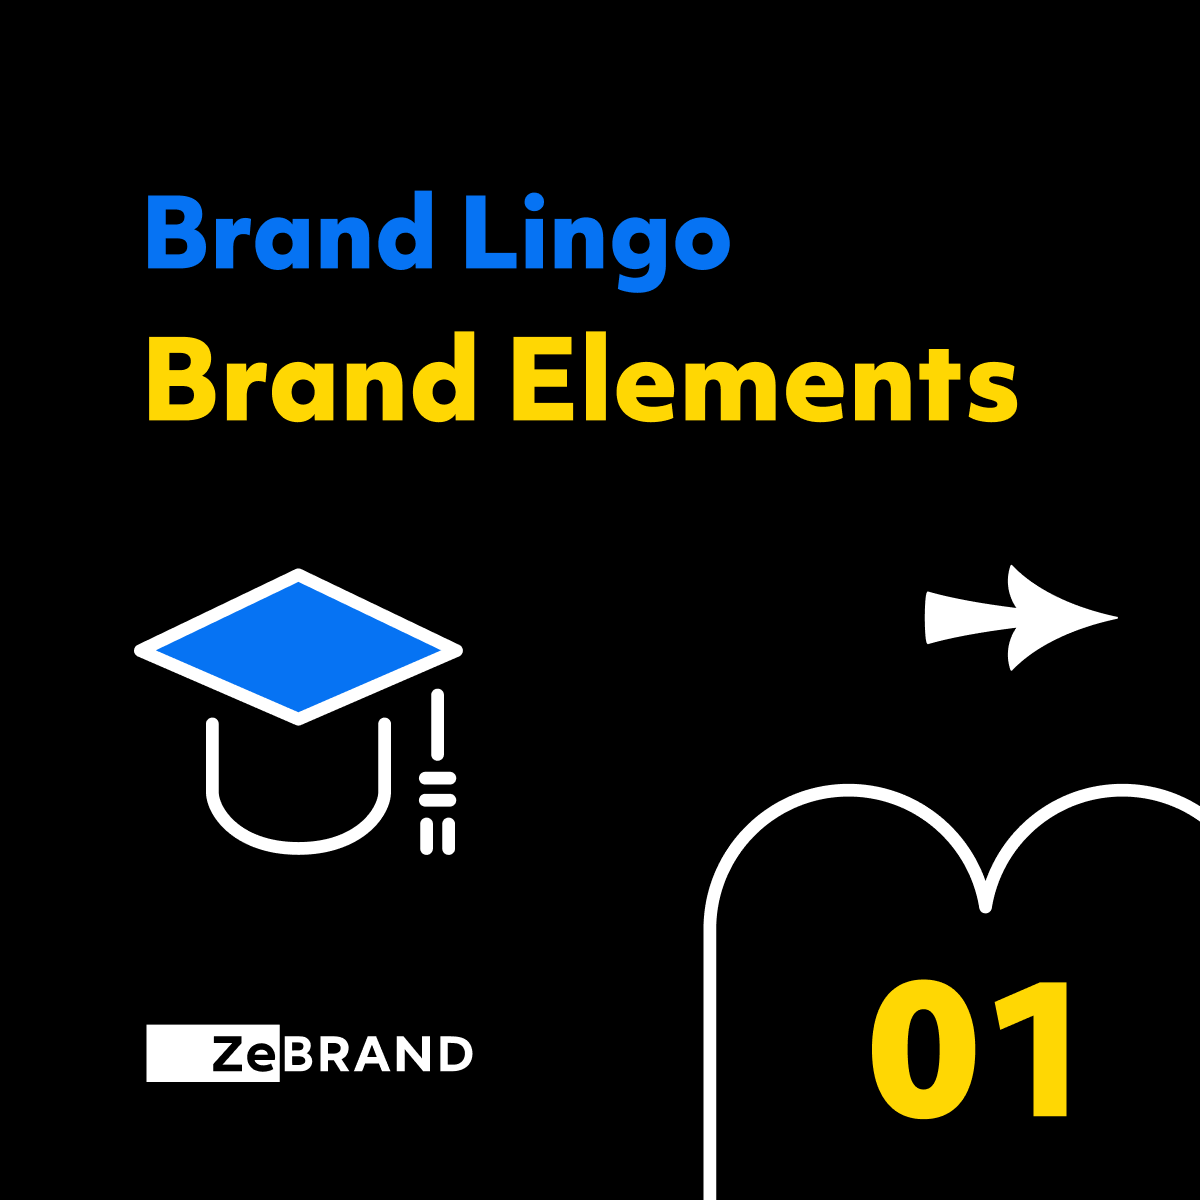 Brand Lingo Brand Elements